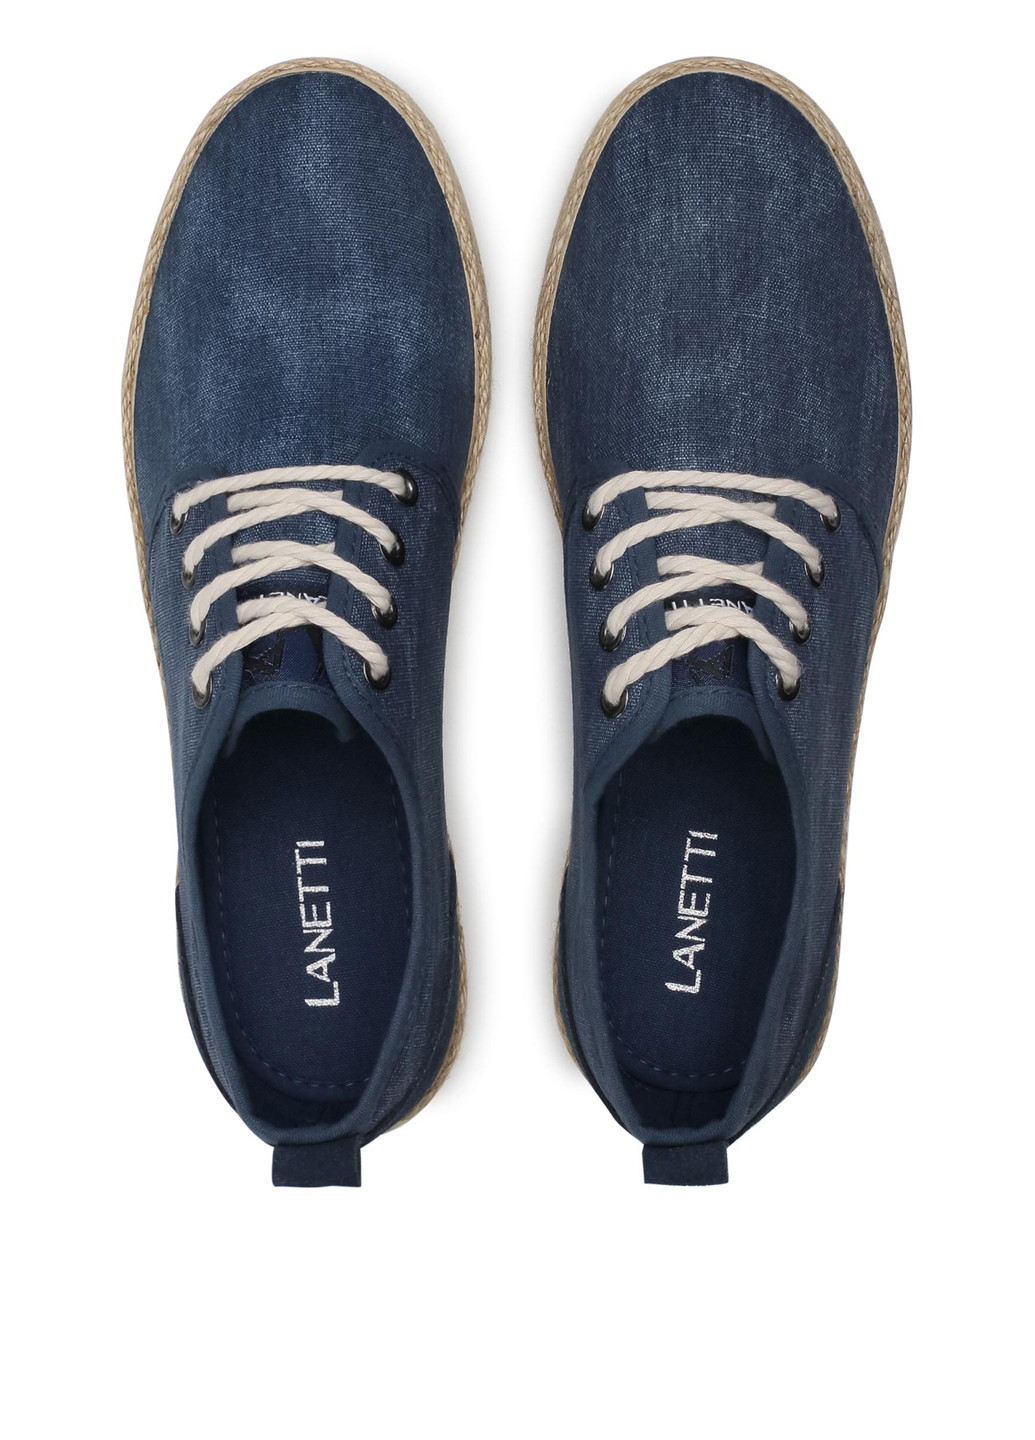 Синие джинсовые півкед Lanetti на шнурках